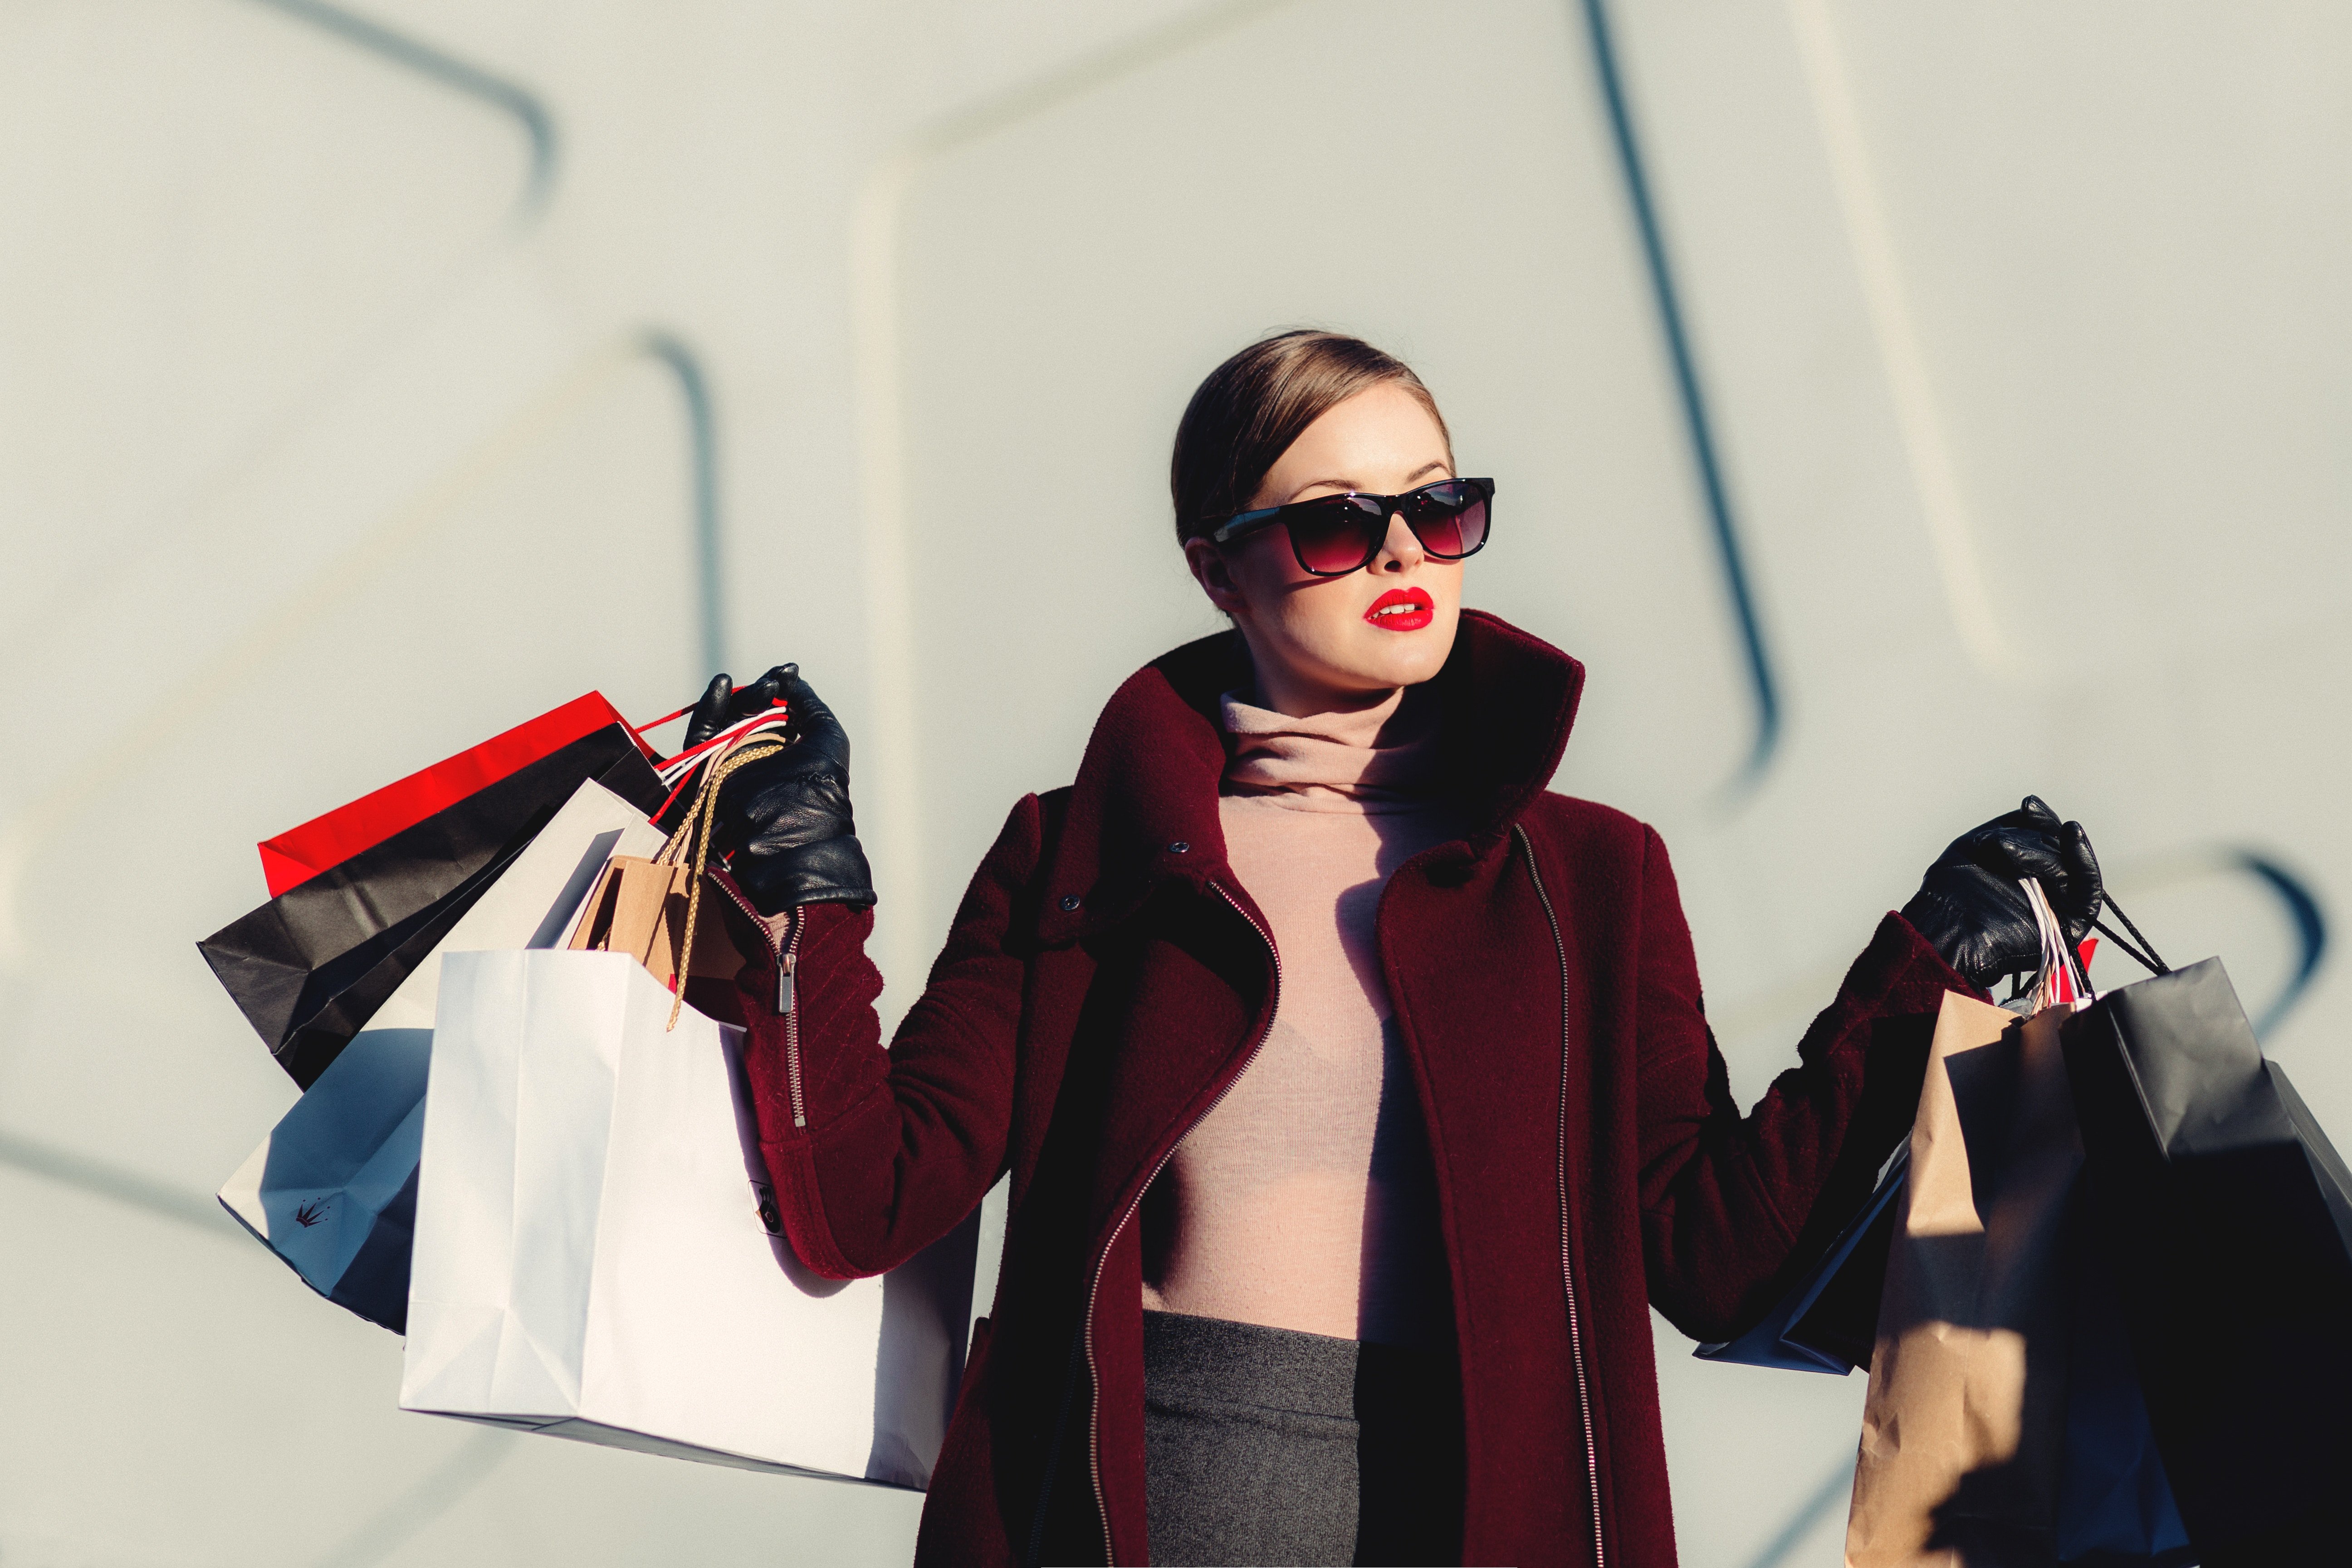 Tax Free шоппинг — как вернуть деньги за покупки?